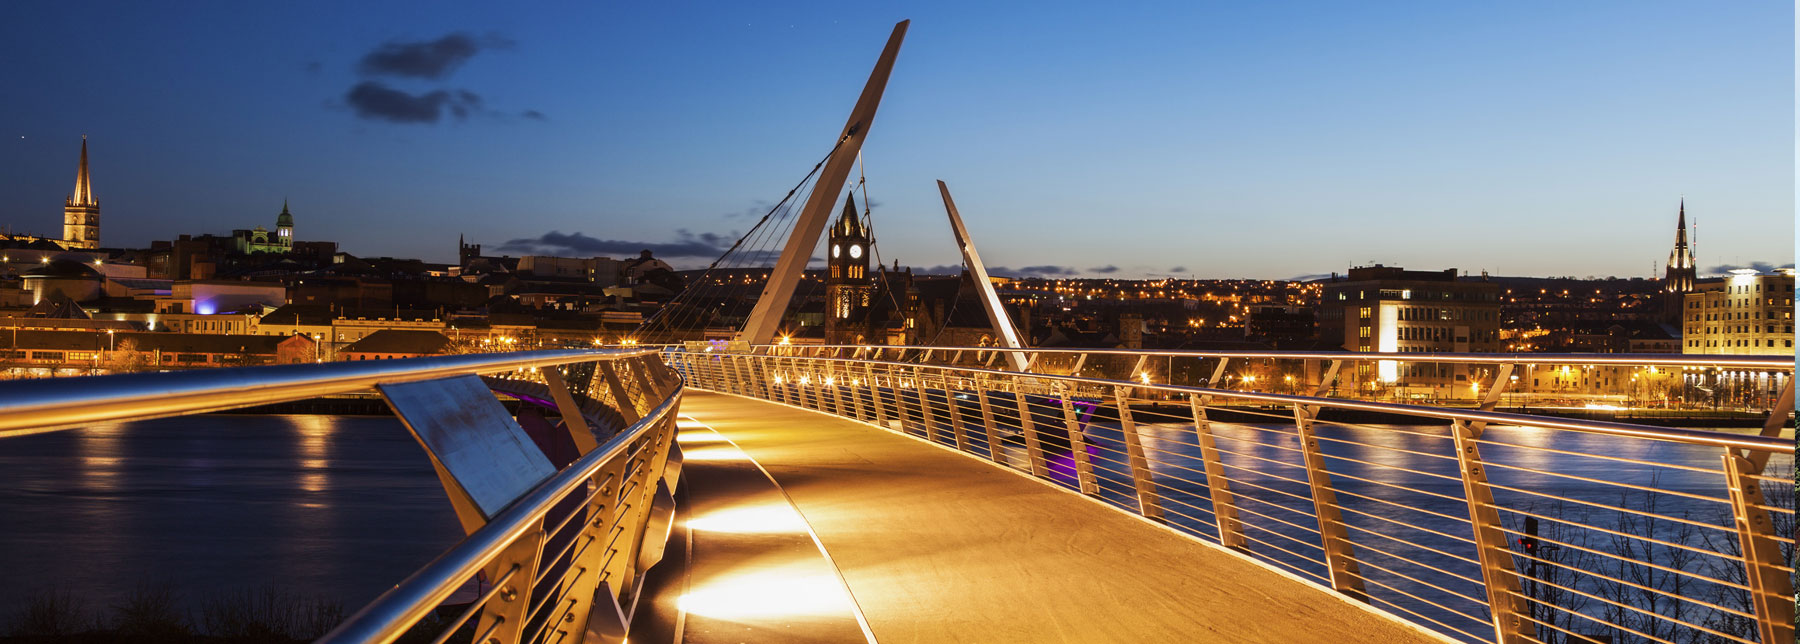 Peace Bridge, Northern Ireland